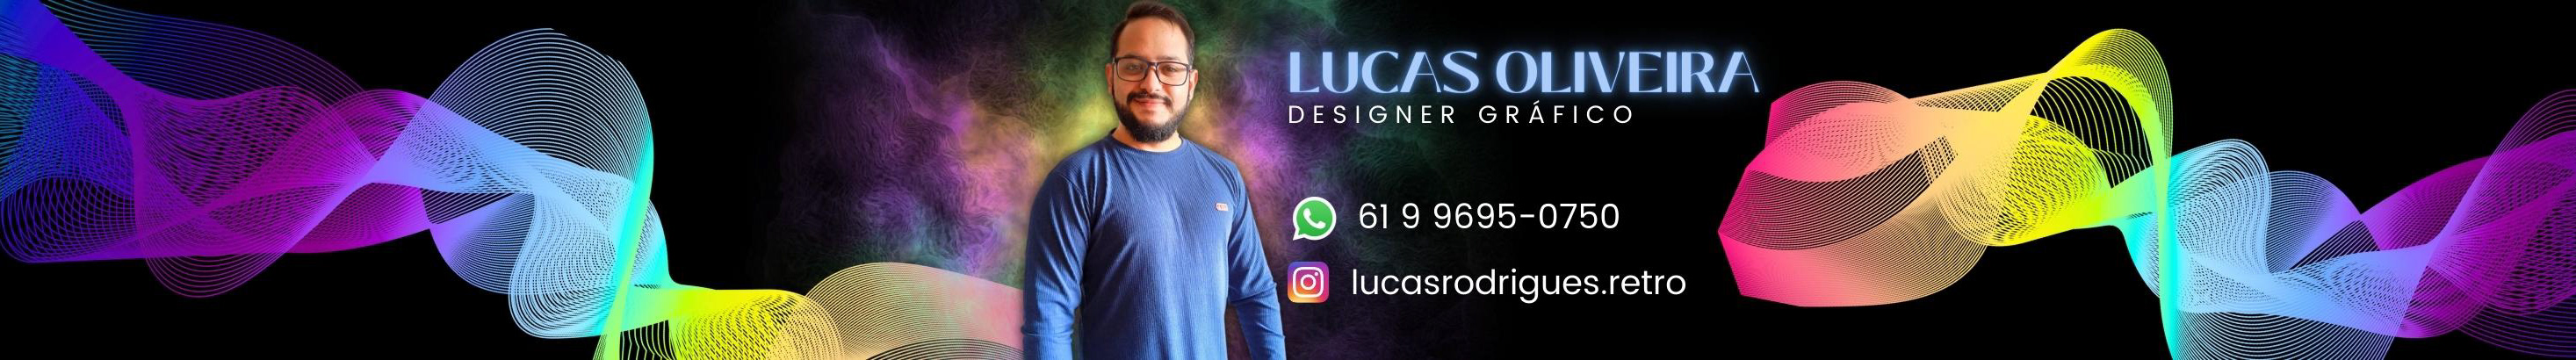 LUCAS OLIVEIRA's profile banner